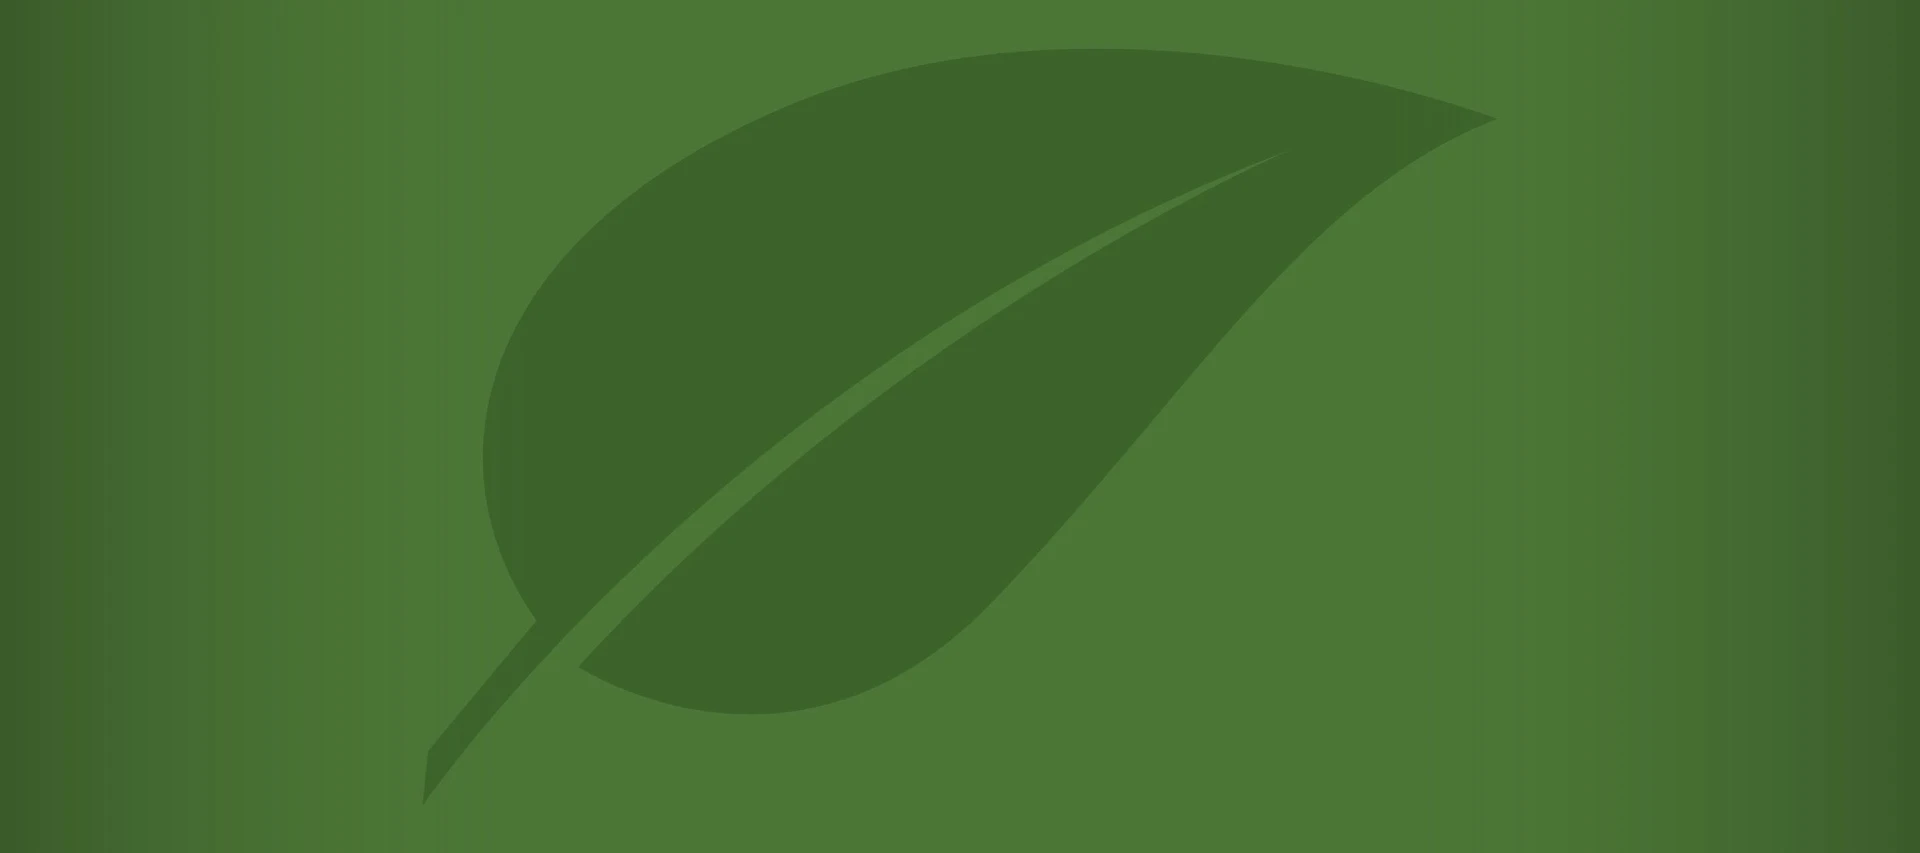 Big green leaf icon on green background.